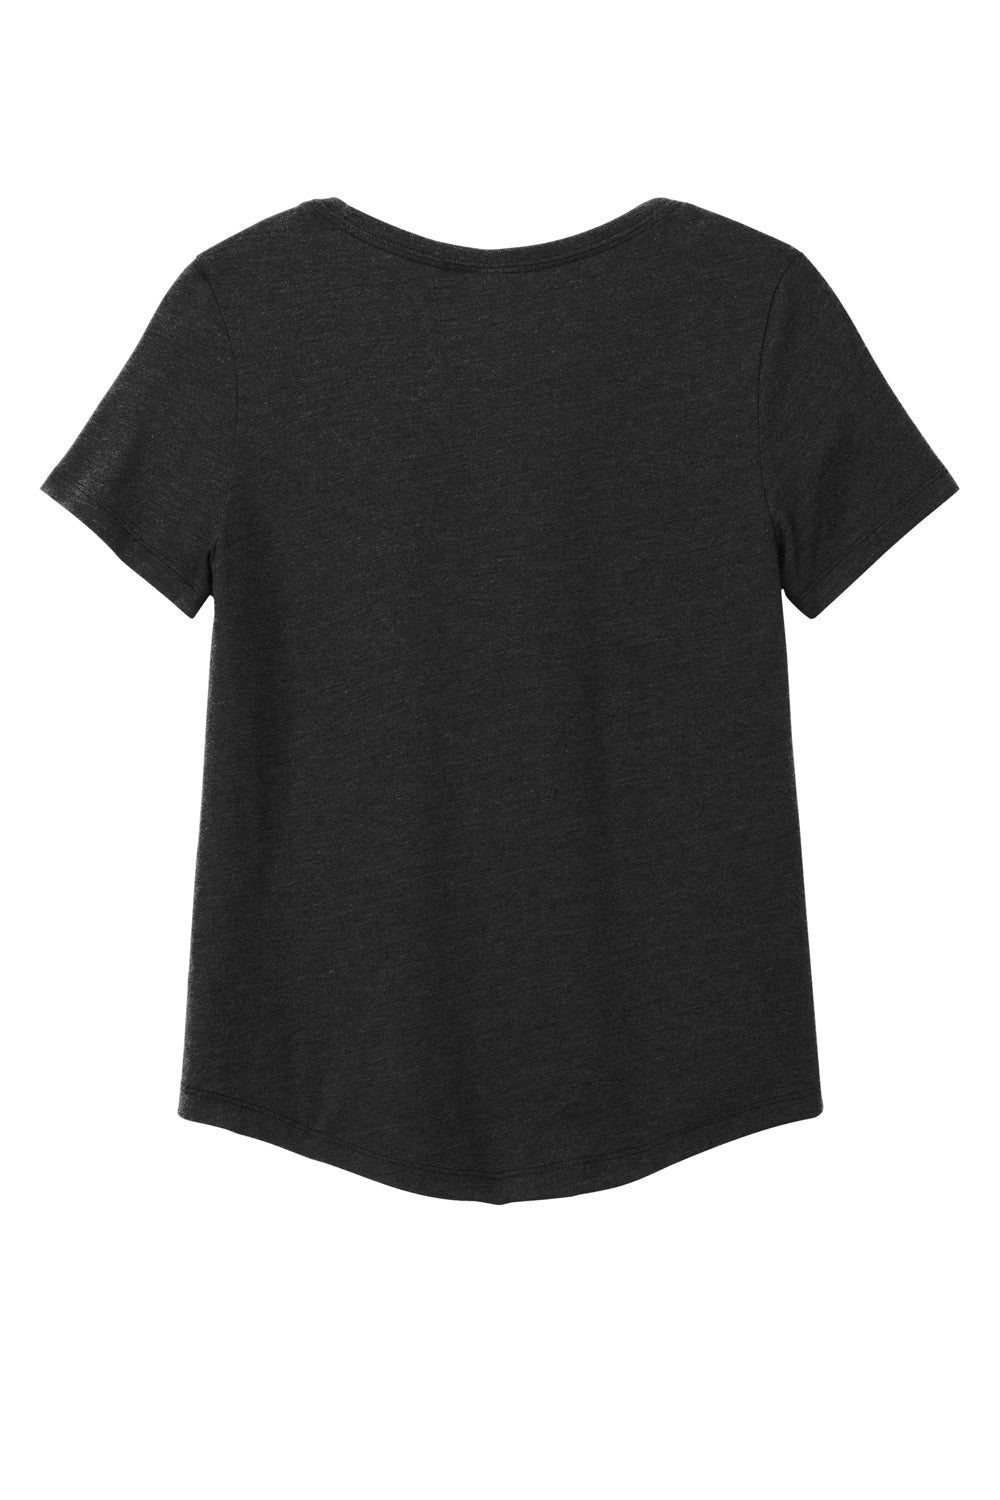 Allmade AL2015 Womens Short Sleeve Scoop Neck T Shirt Space Black Flat Back